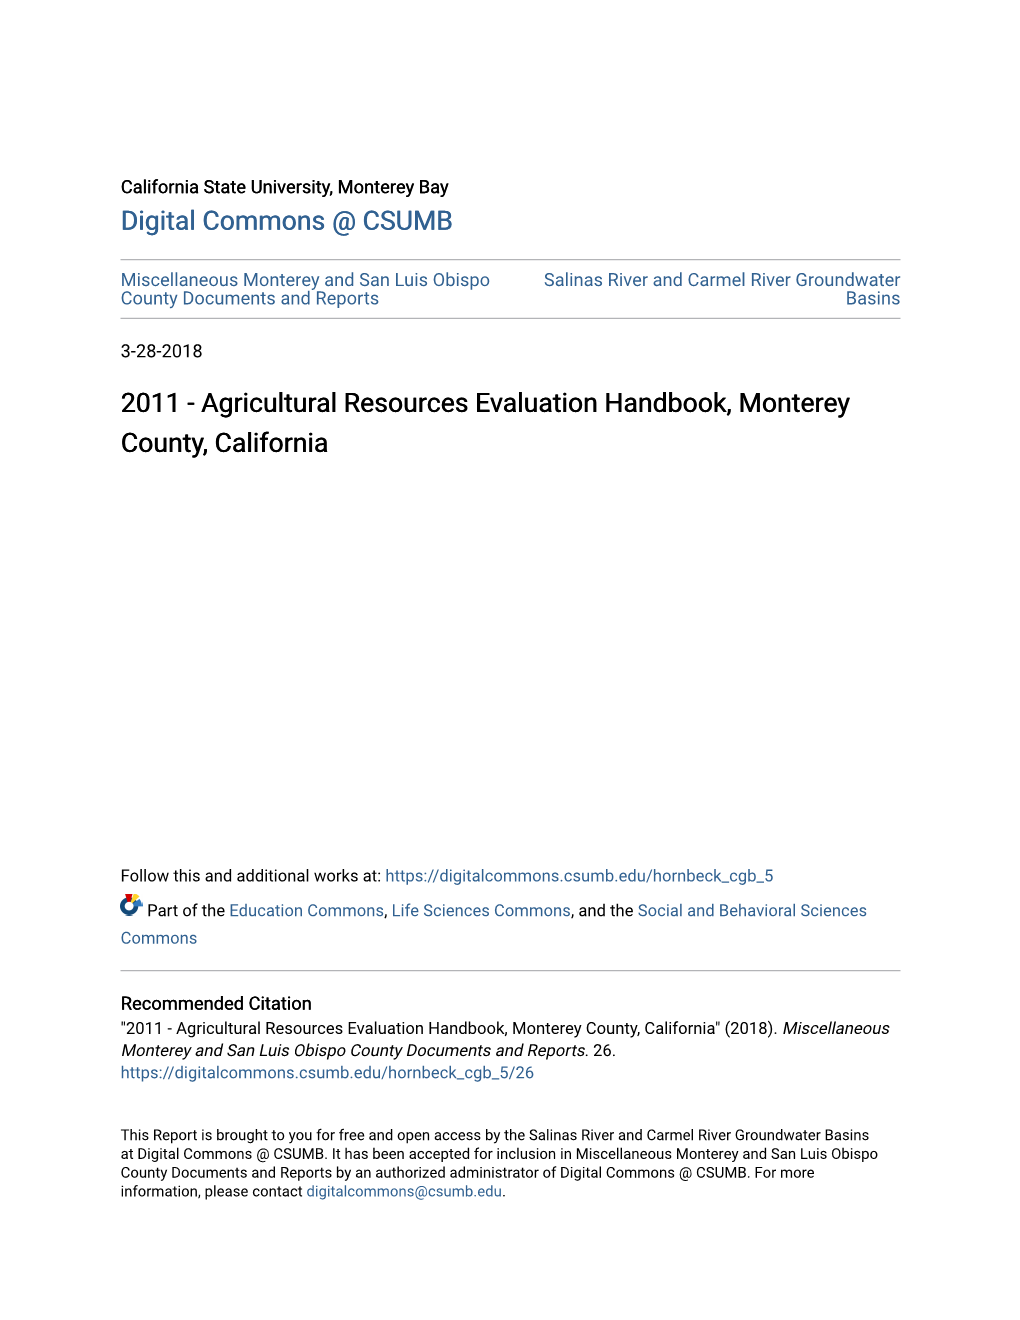 Agricultural Resources Evaluation Handbook, Monterey County, California